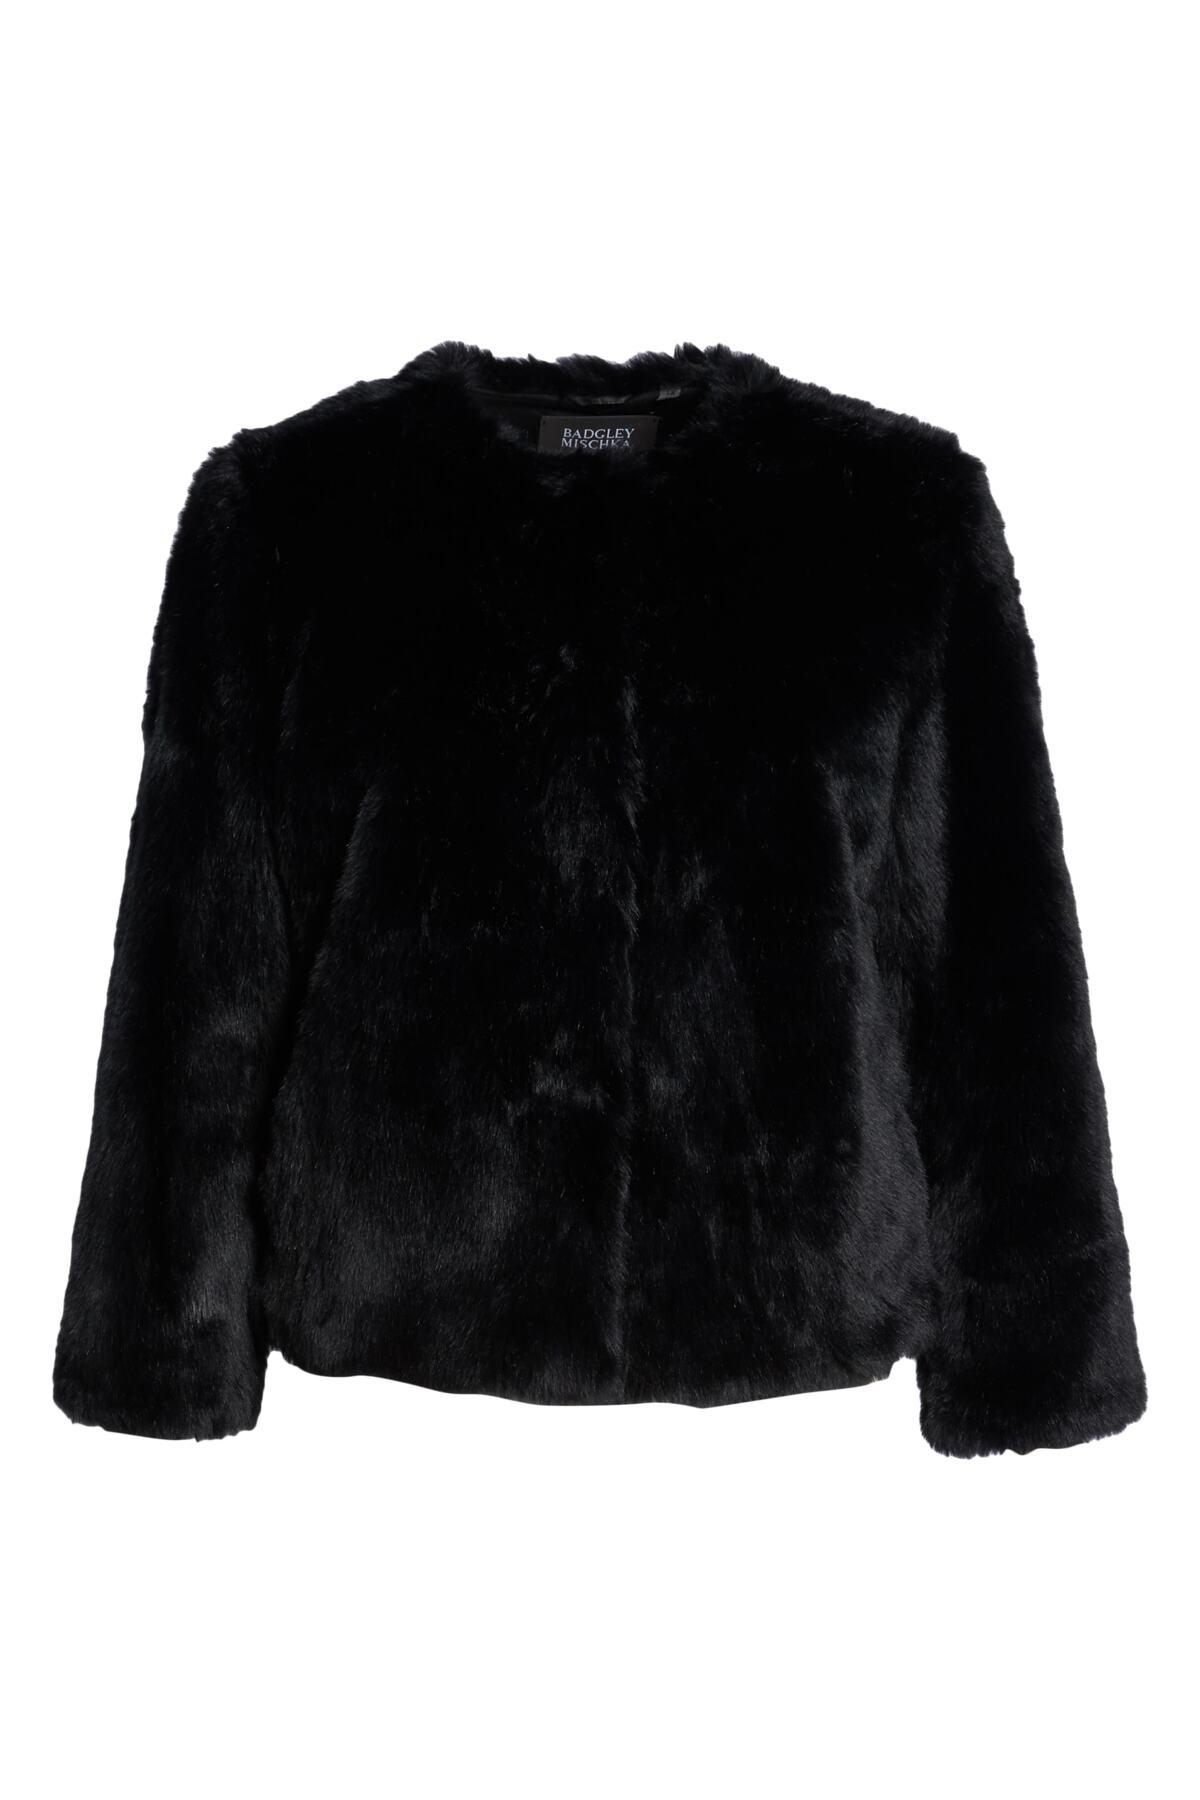 Badgley Mischka Collarless Faux Fur Jacket (plus Size) in Black - Lyst